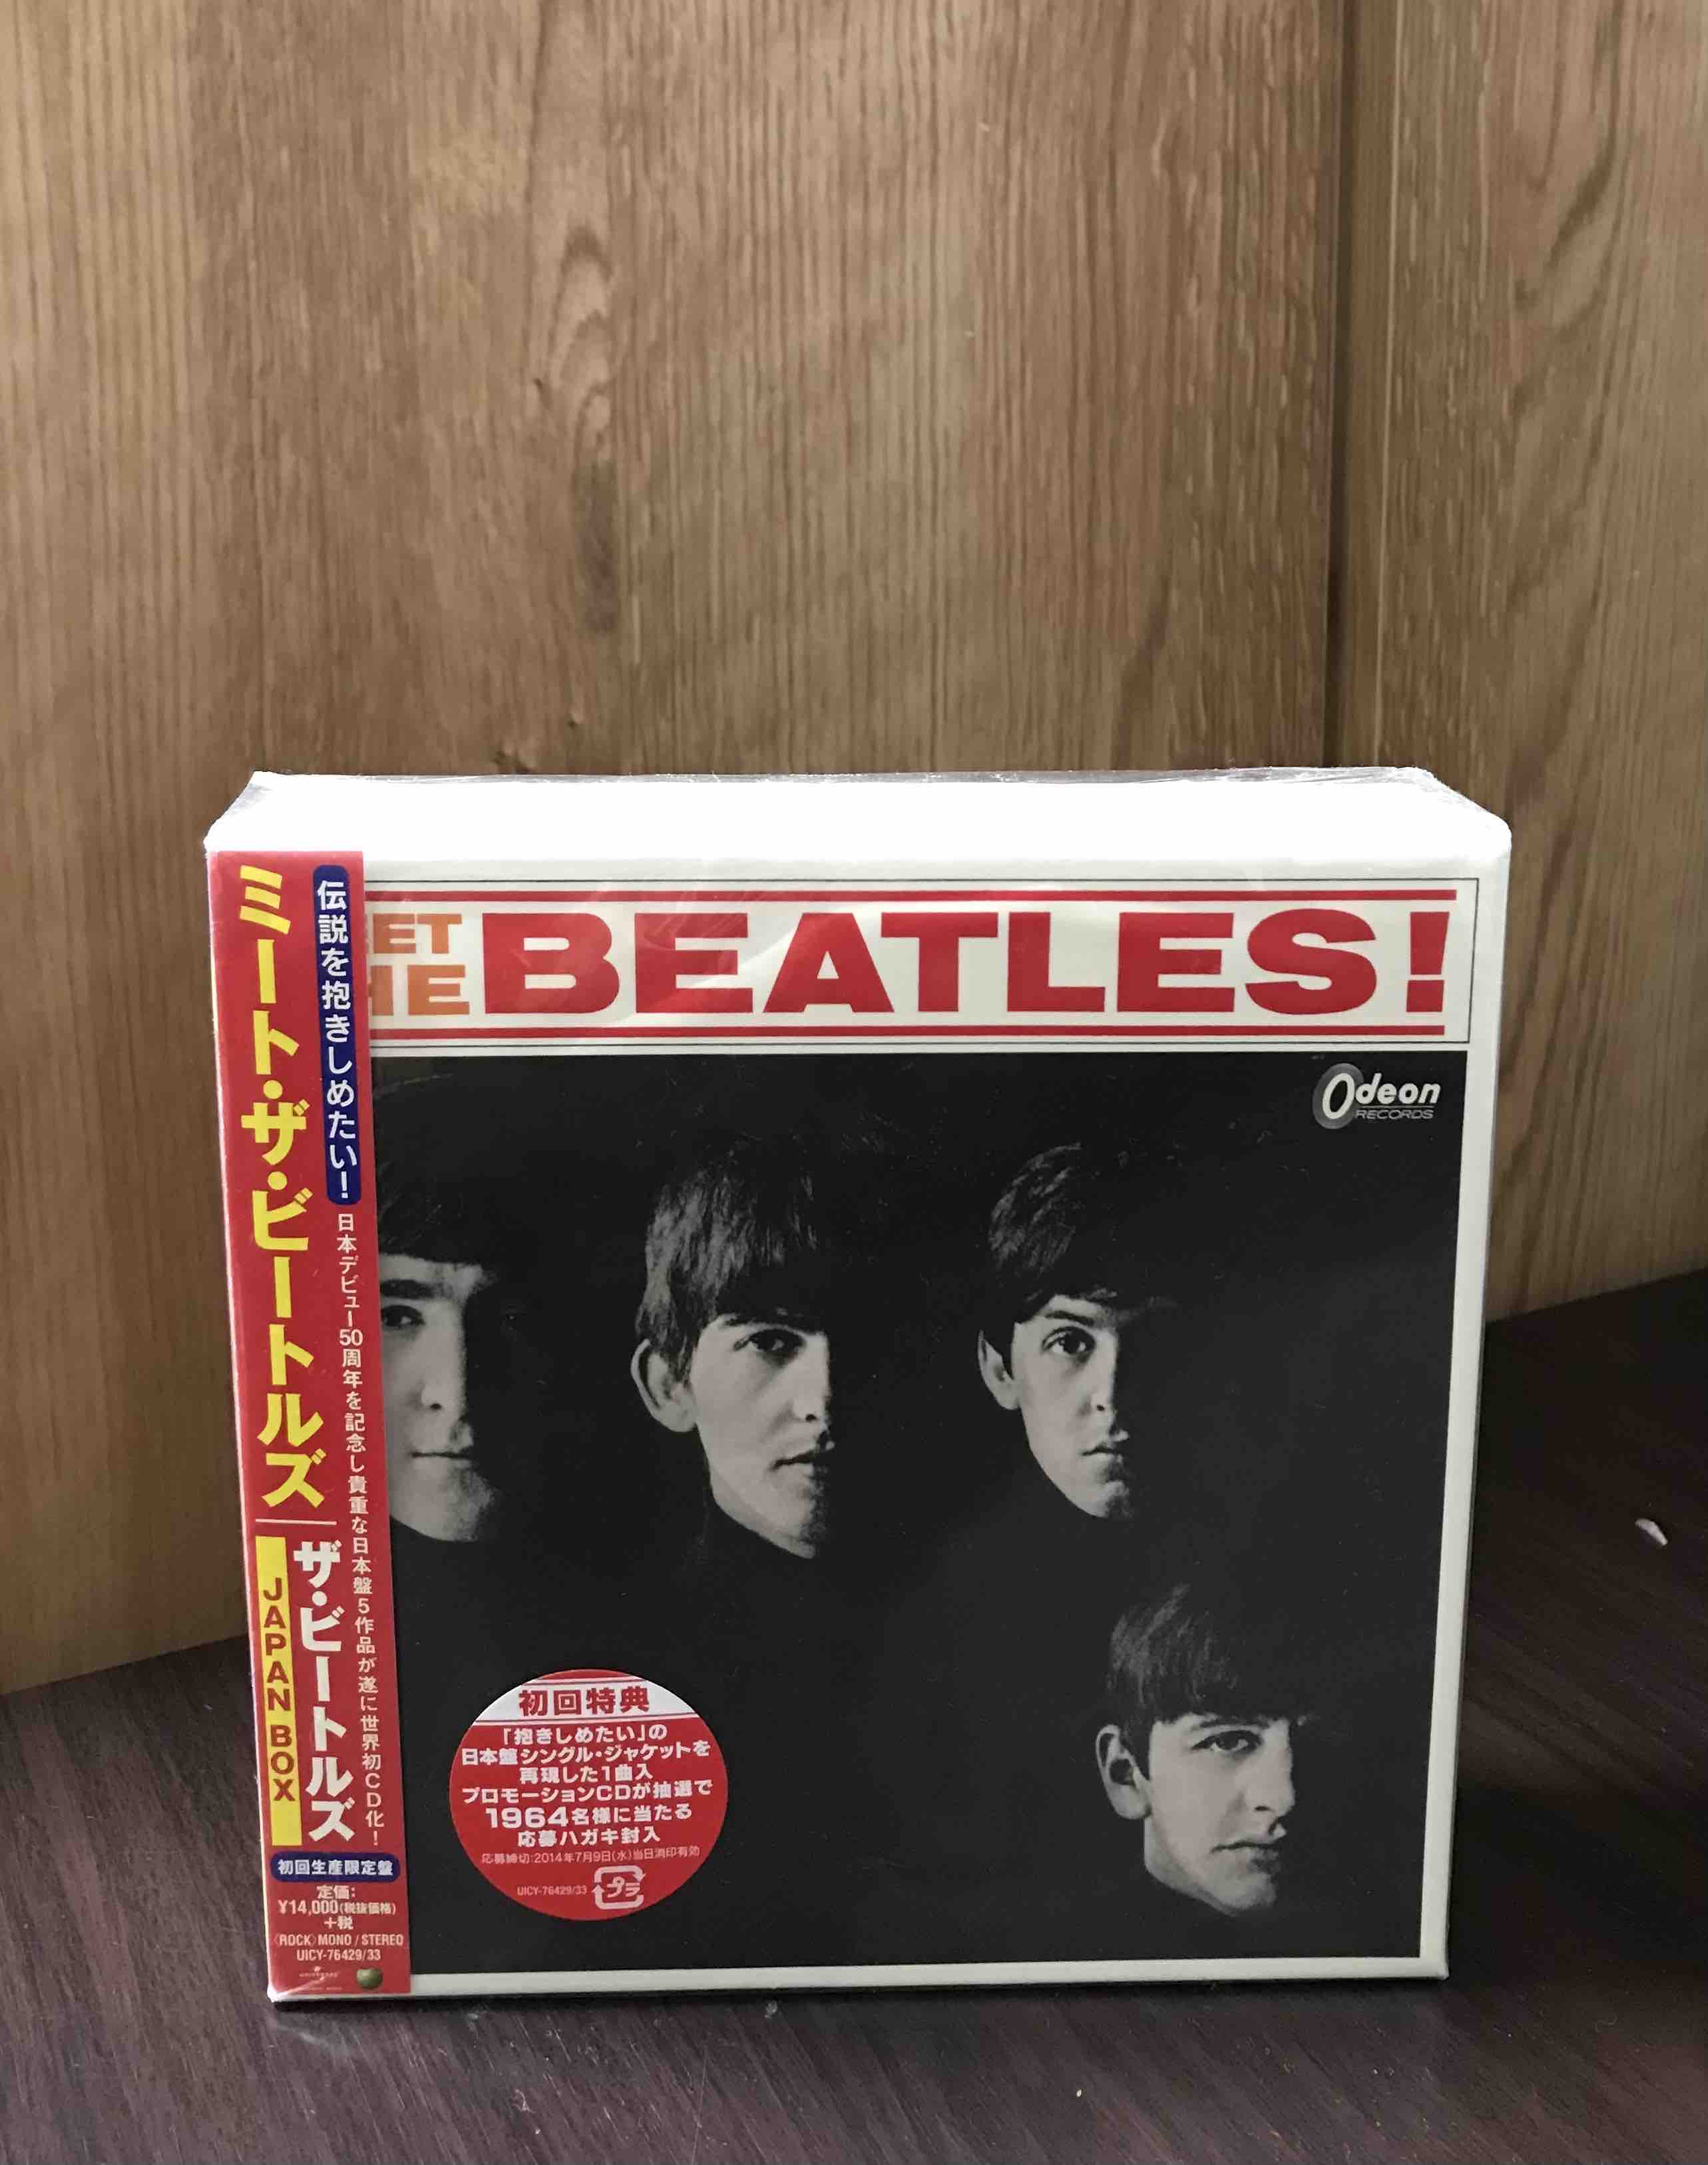 The Beatles – Meet The Beatles! (Japan Box)